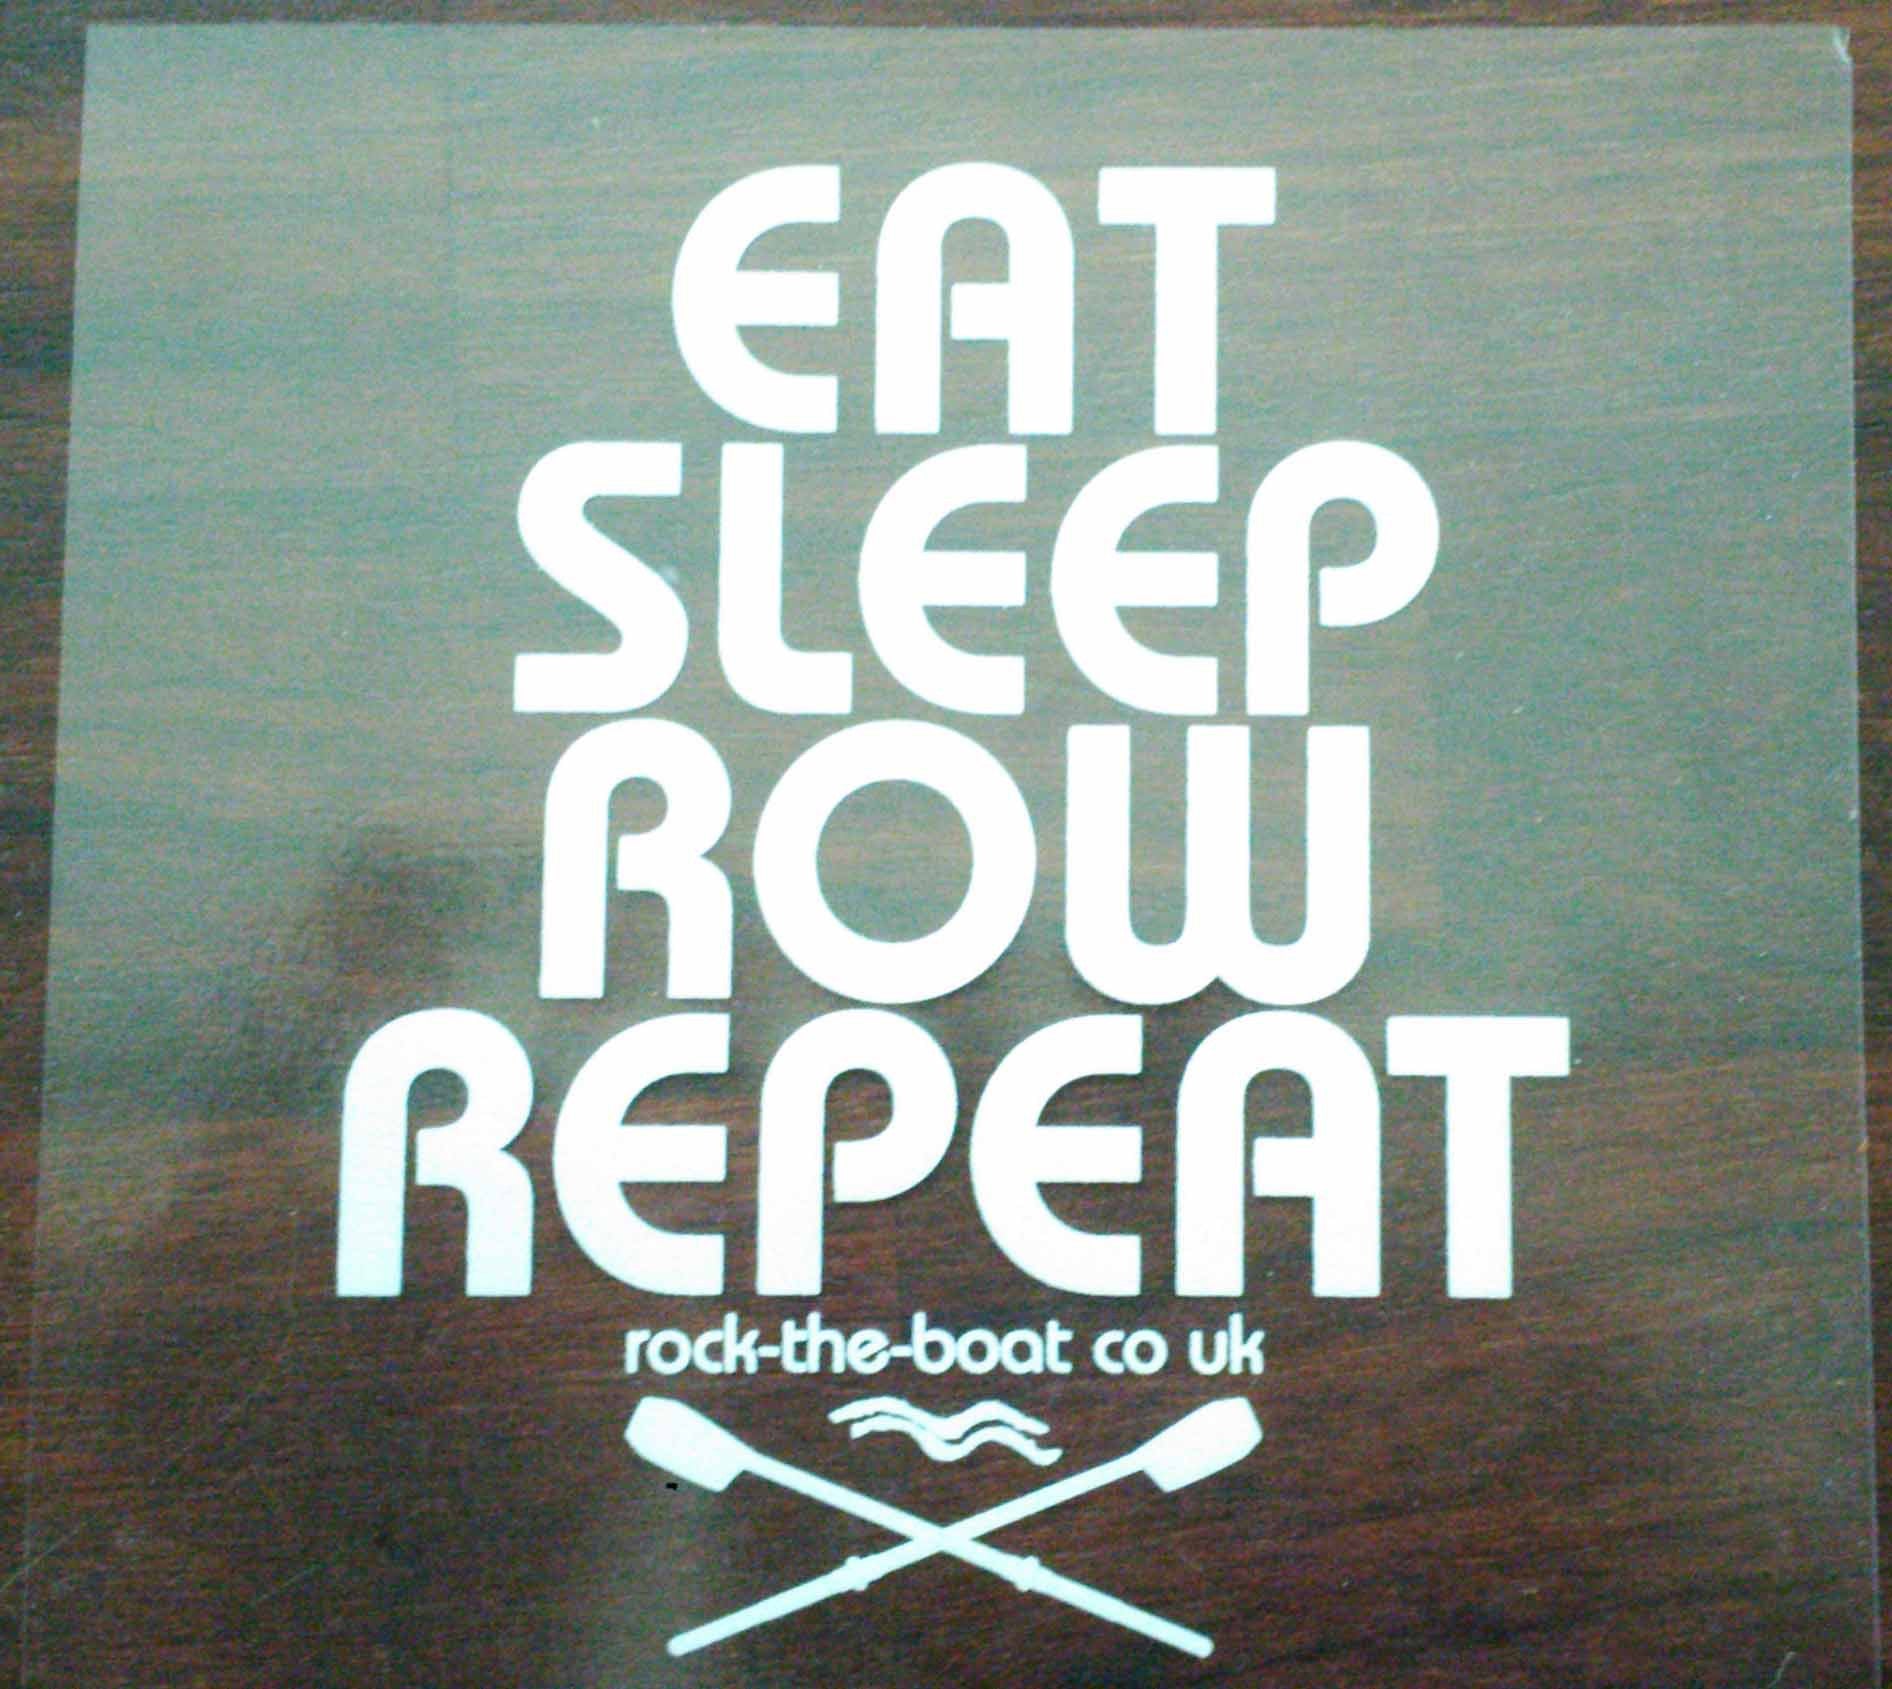 Eat sleep row repeat window sticker